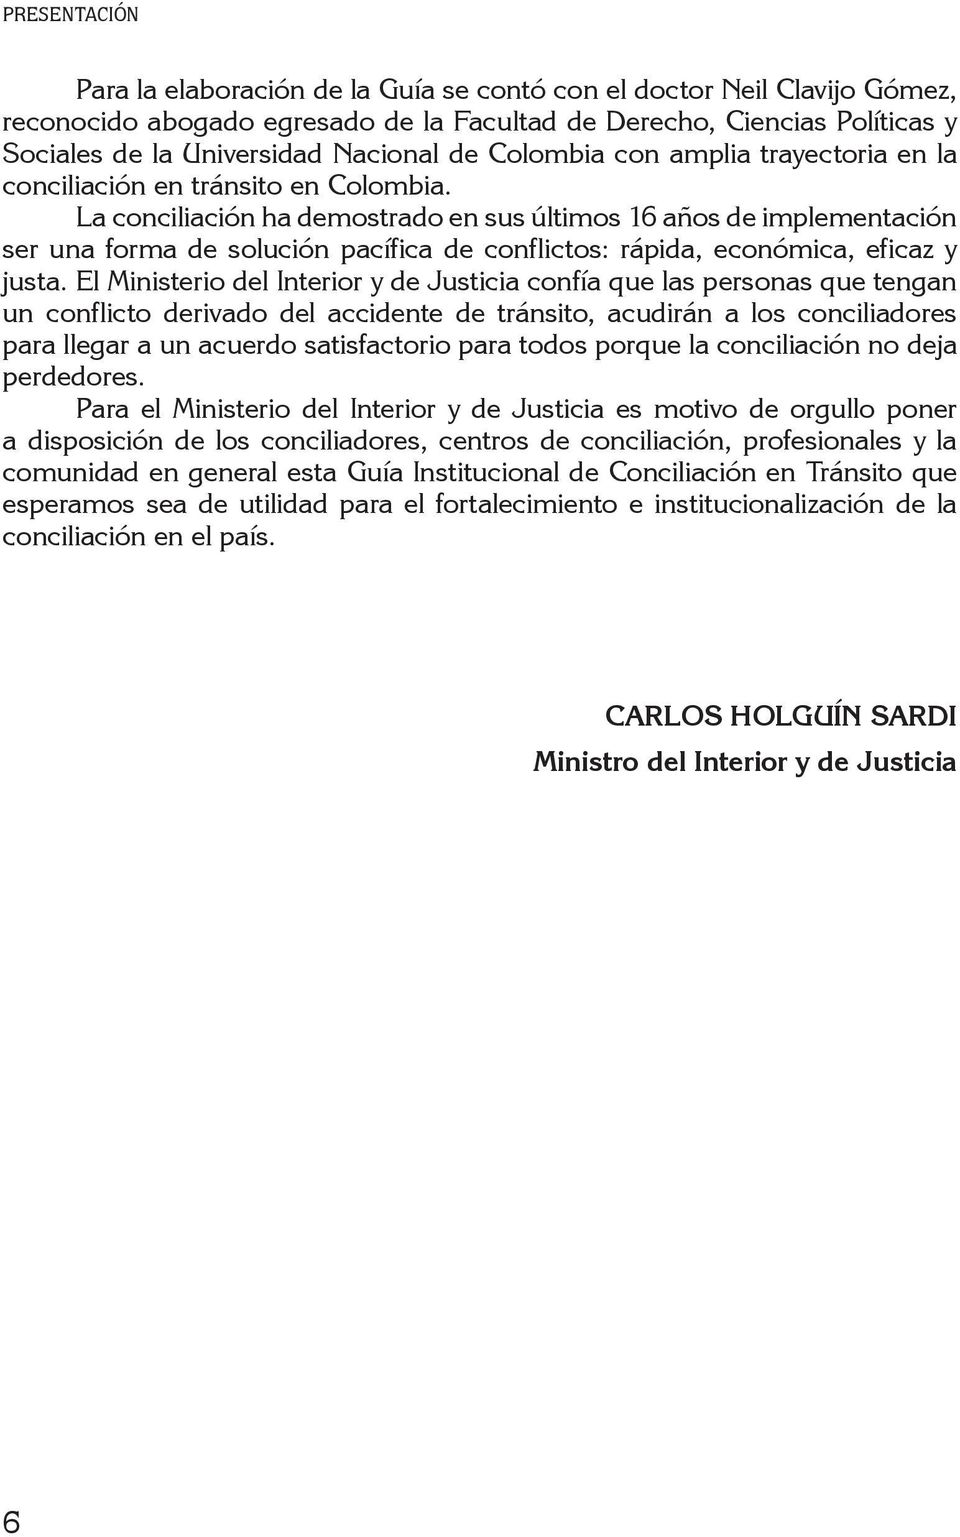 GUÍA INSTITUCIONAL DE CONCILIACIÓN EN TRÁNSITO - PDF Descargar libre